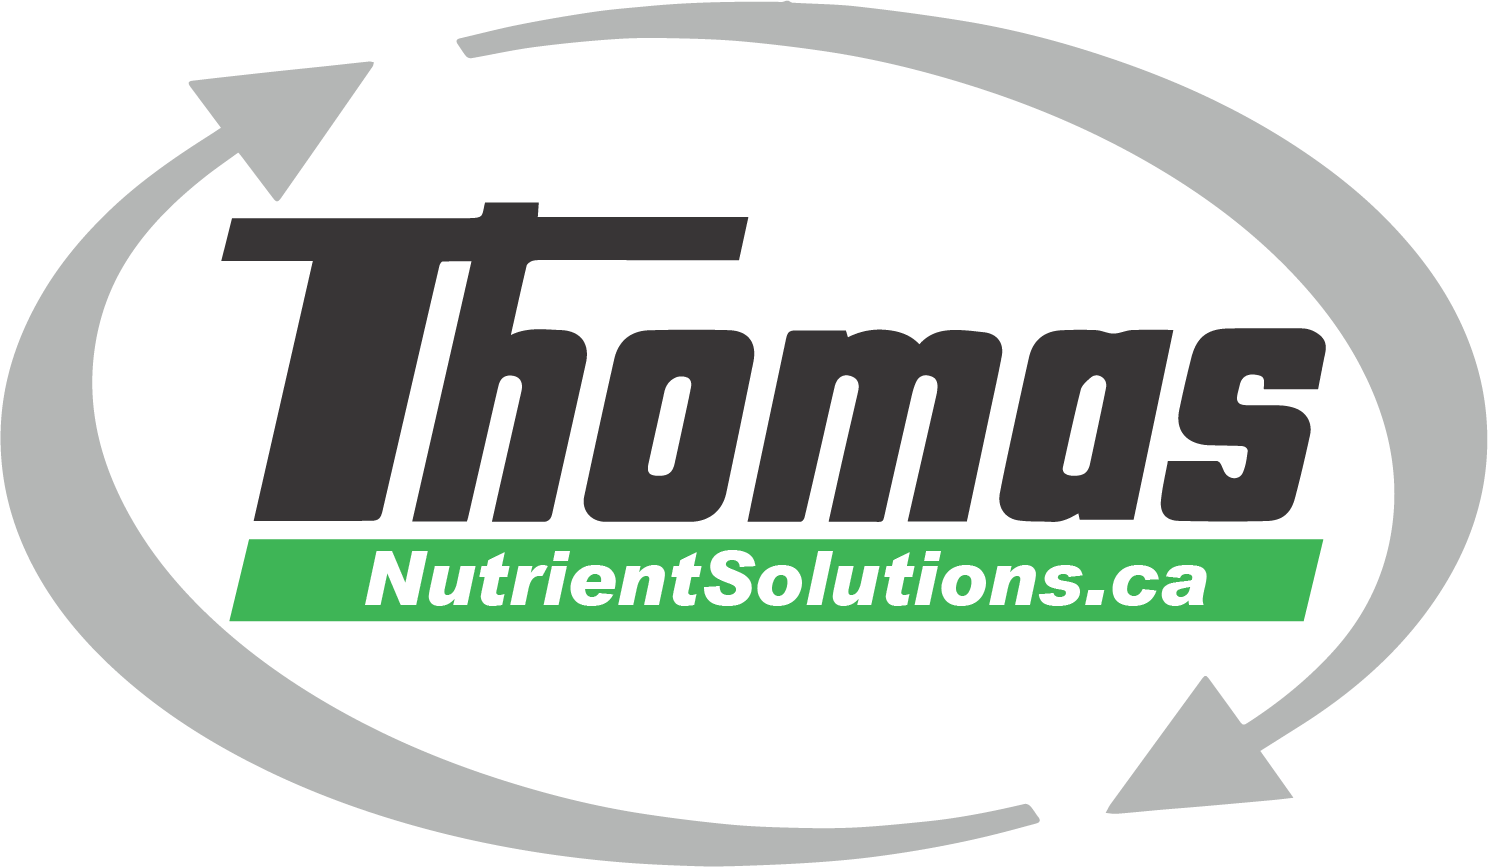 Thomas Nutrient Solutions